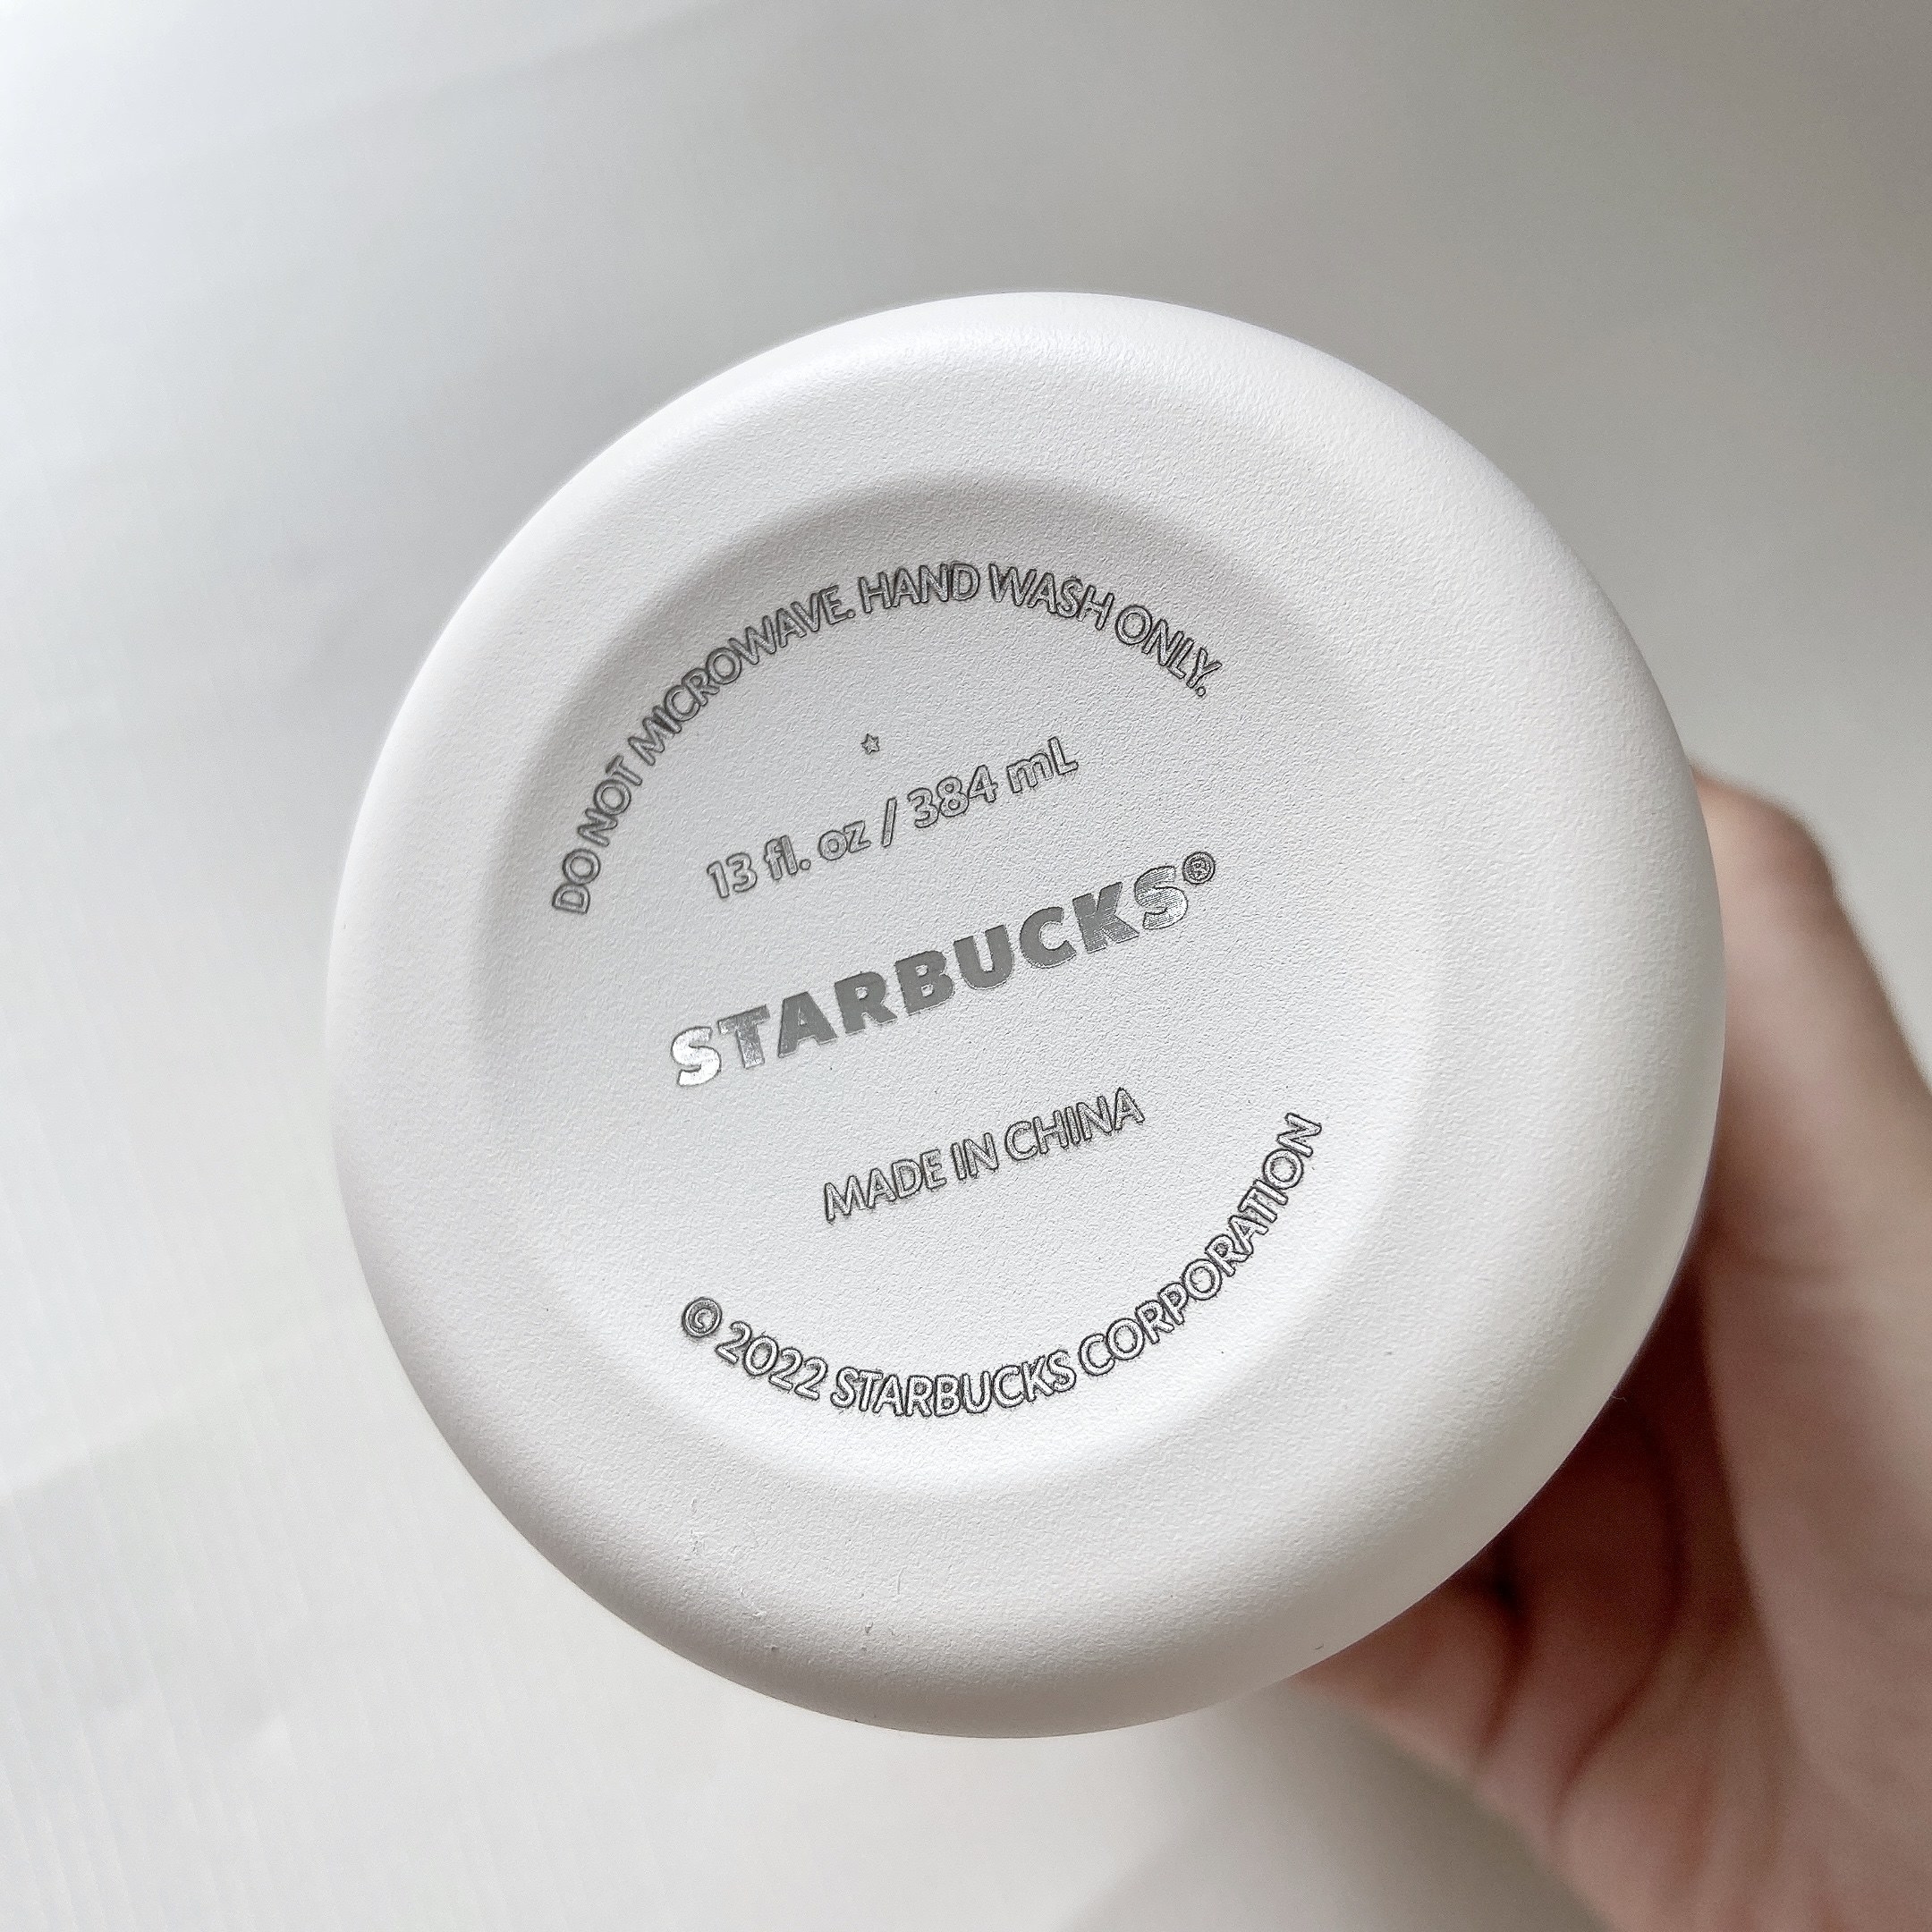 Starbucks Coffee（スターバックスコーヒー）のおすすめボトル「[オンラインストア限定]ステンレスボトルBACK-TO-SCHOOL384ml」